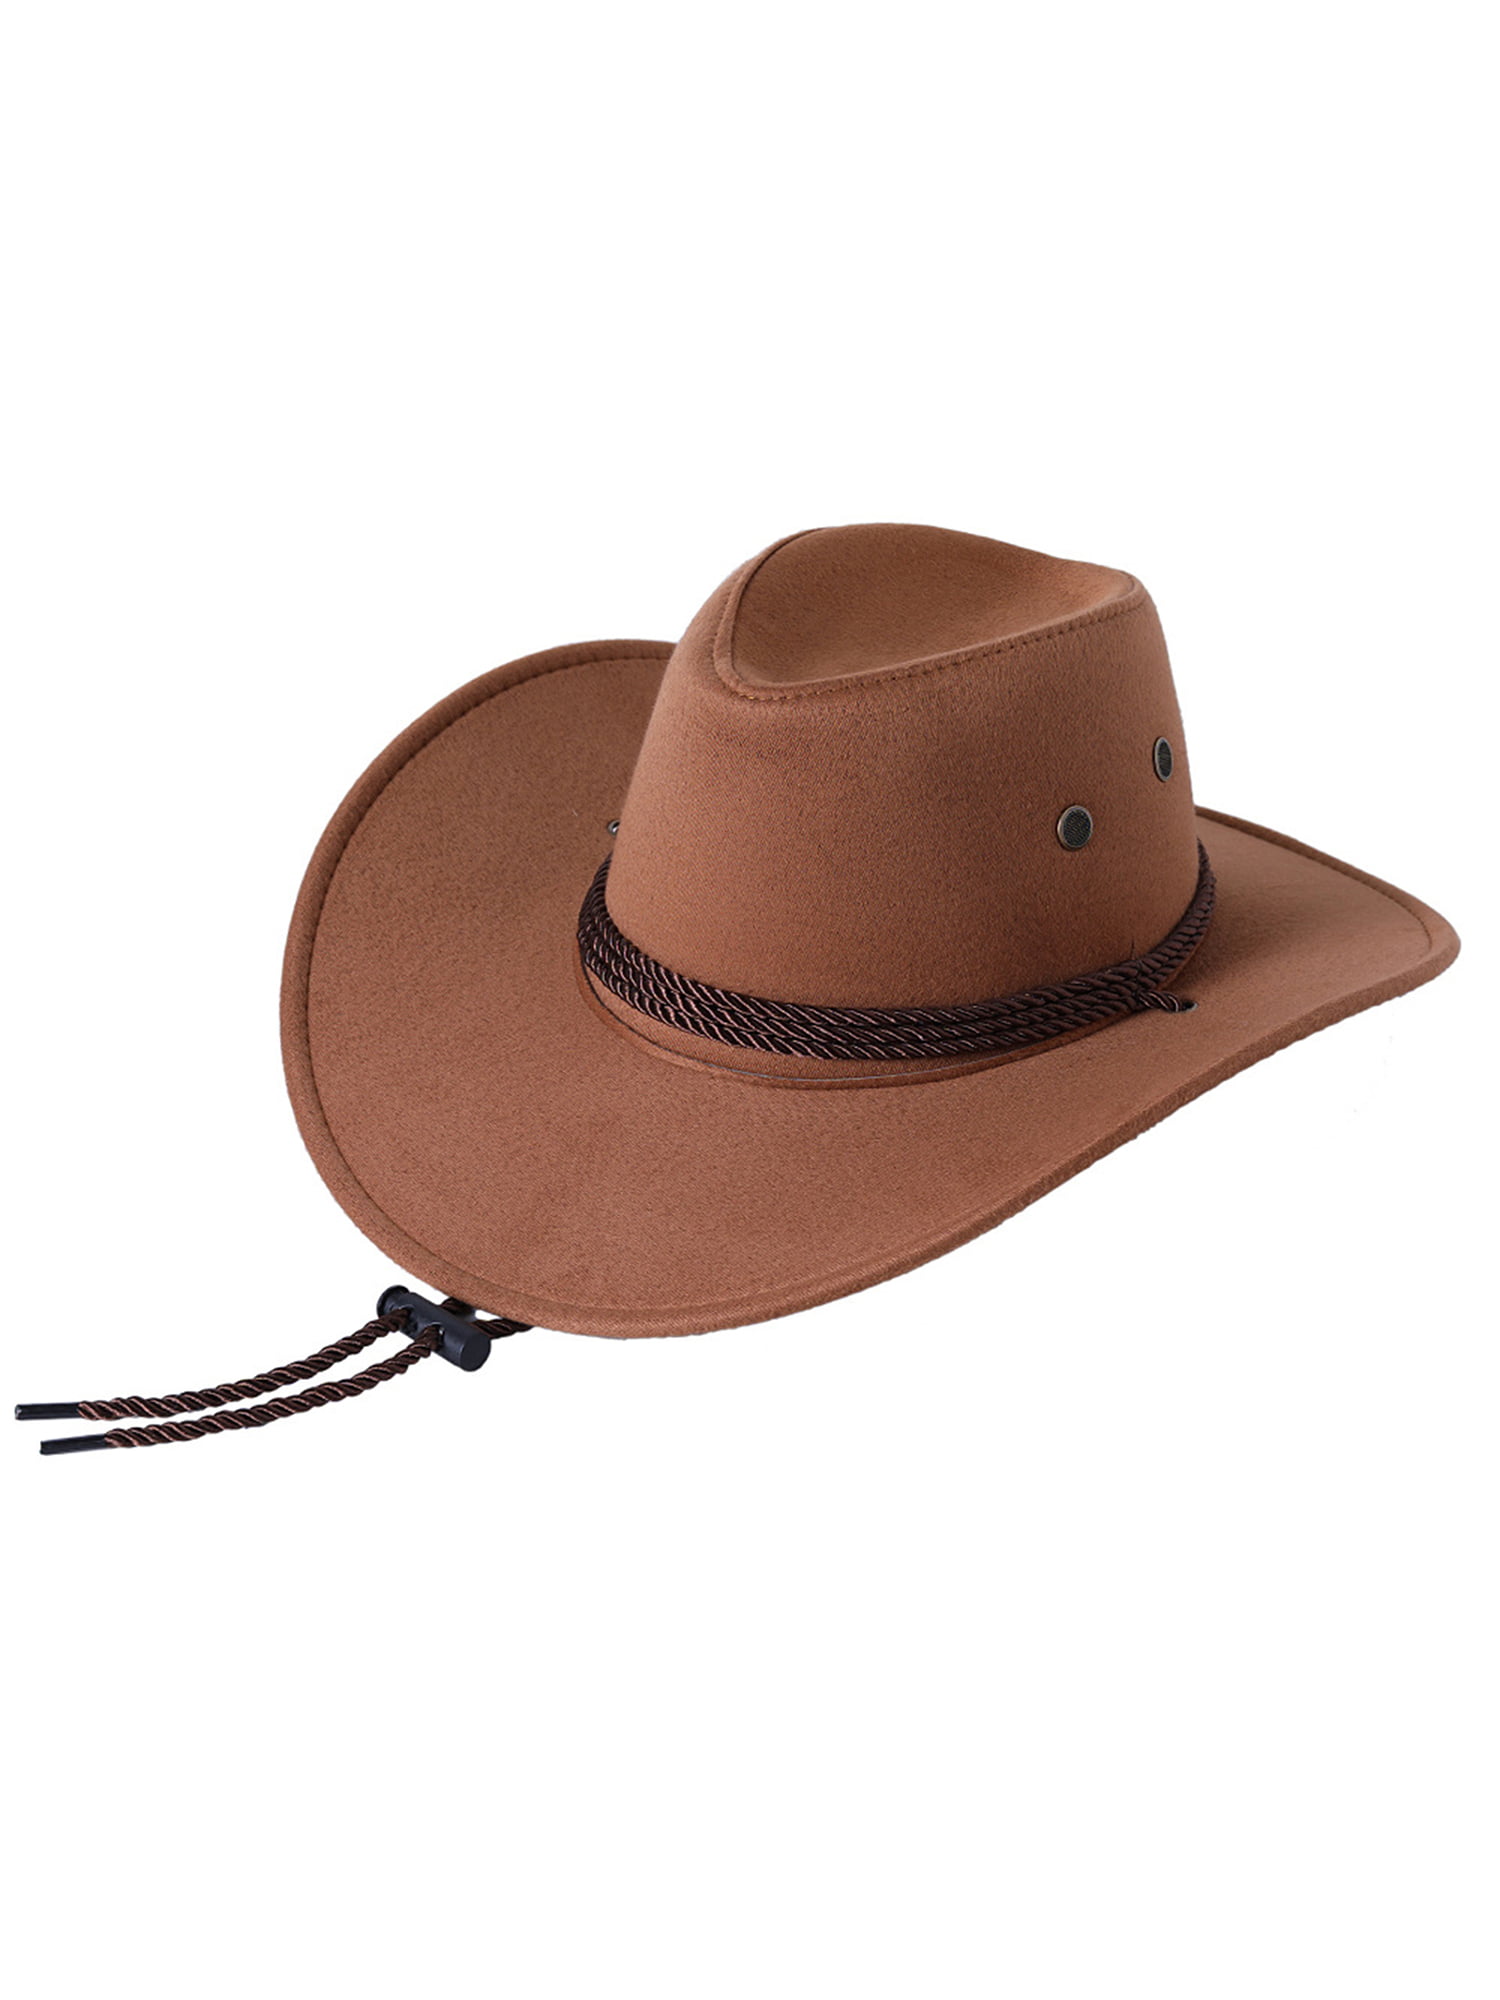 Kids Boys Girls Felt Cowboy Hat Wool Blend Children Western Cowgirl Cap Size XS